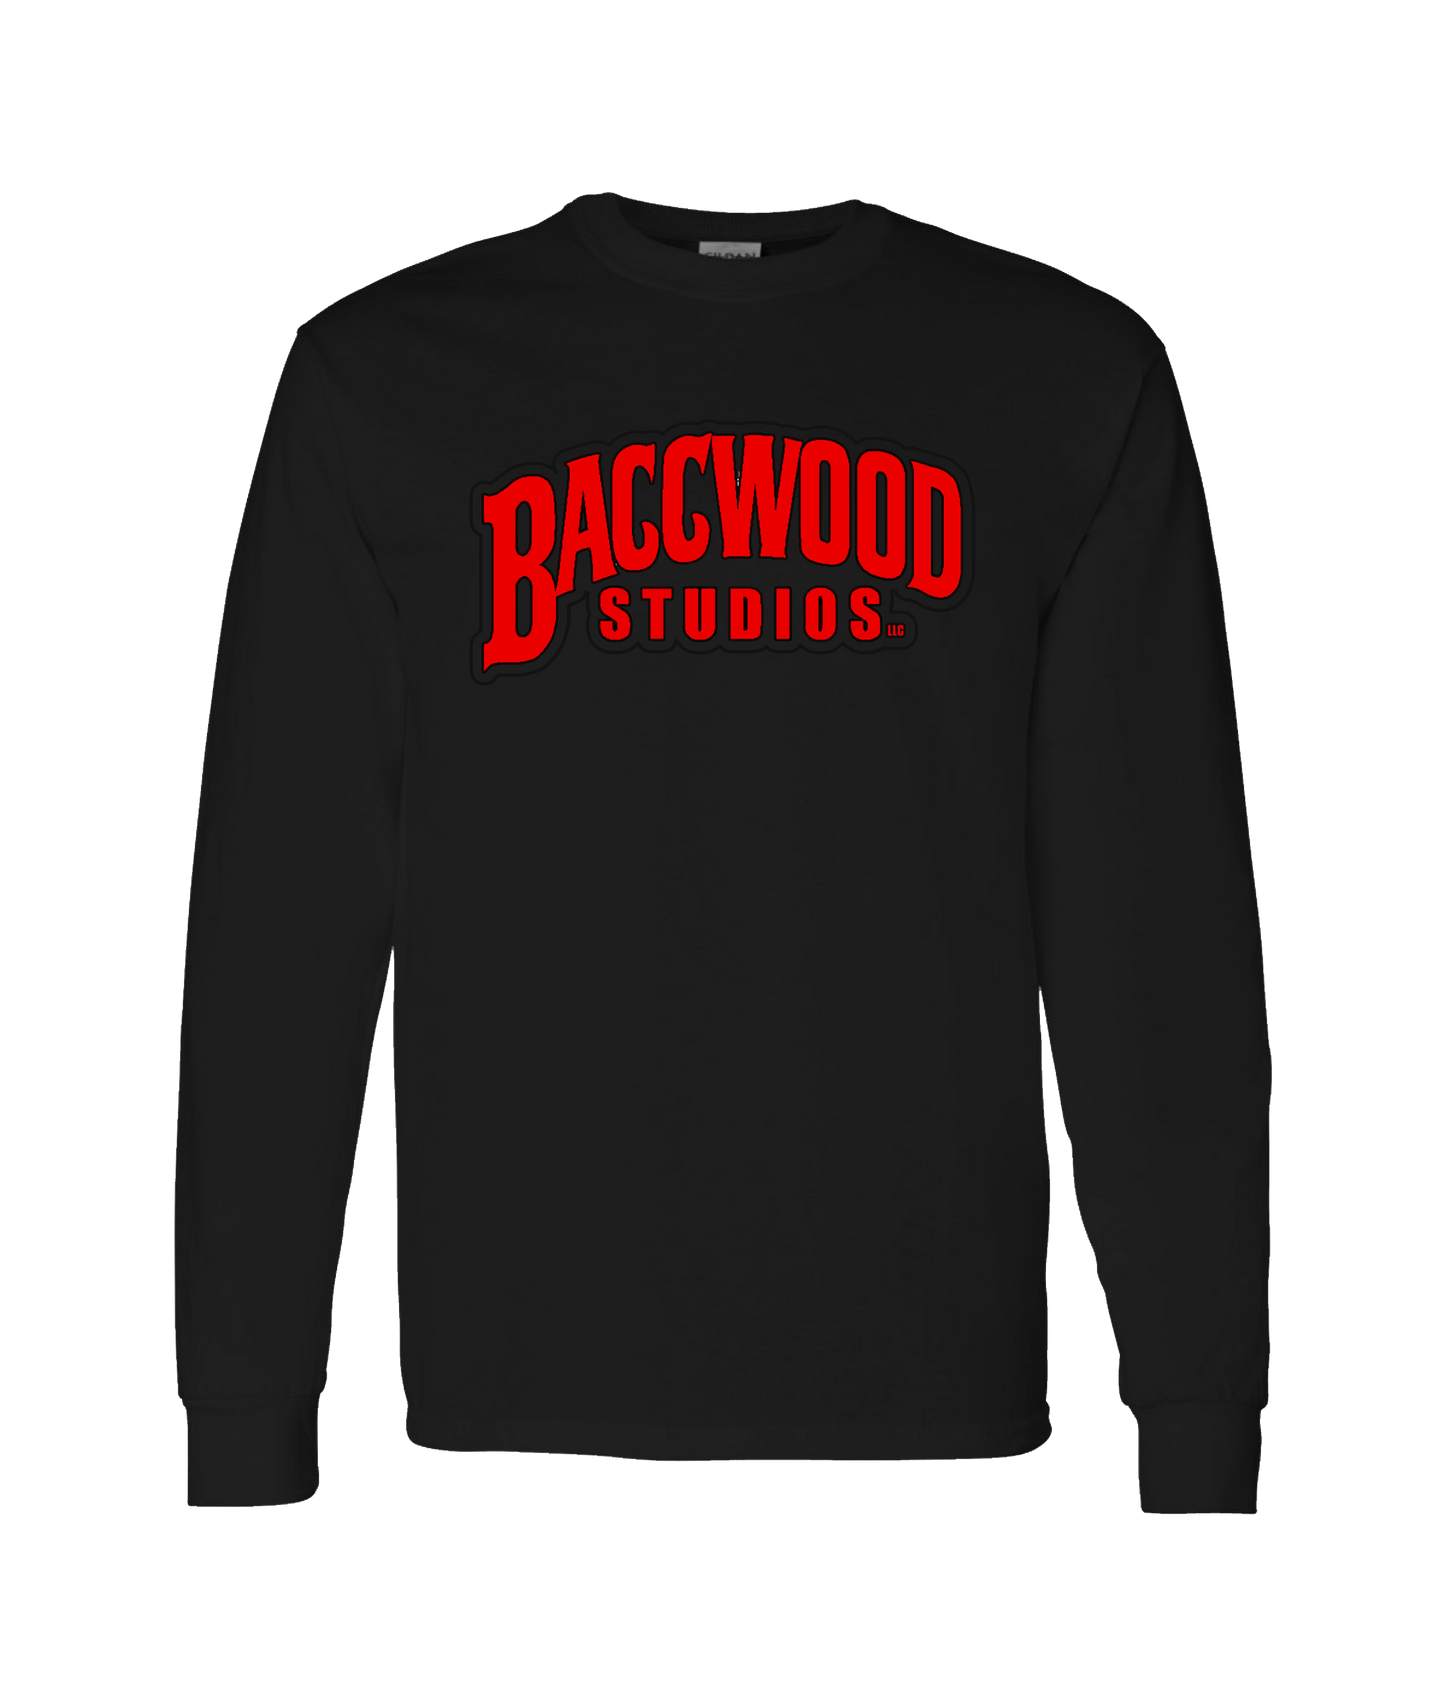 Baccwood Studios - Red Logo - Black Long Sleeve T